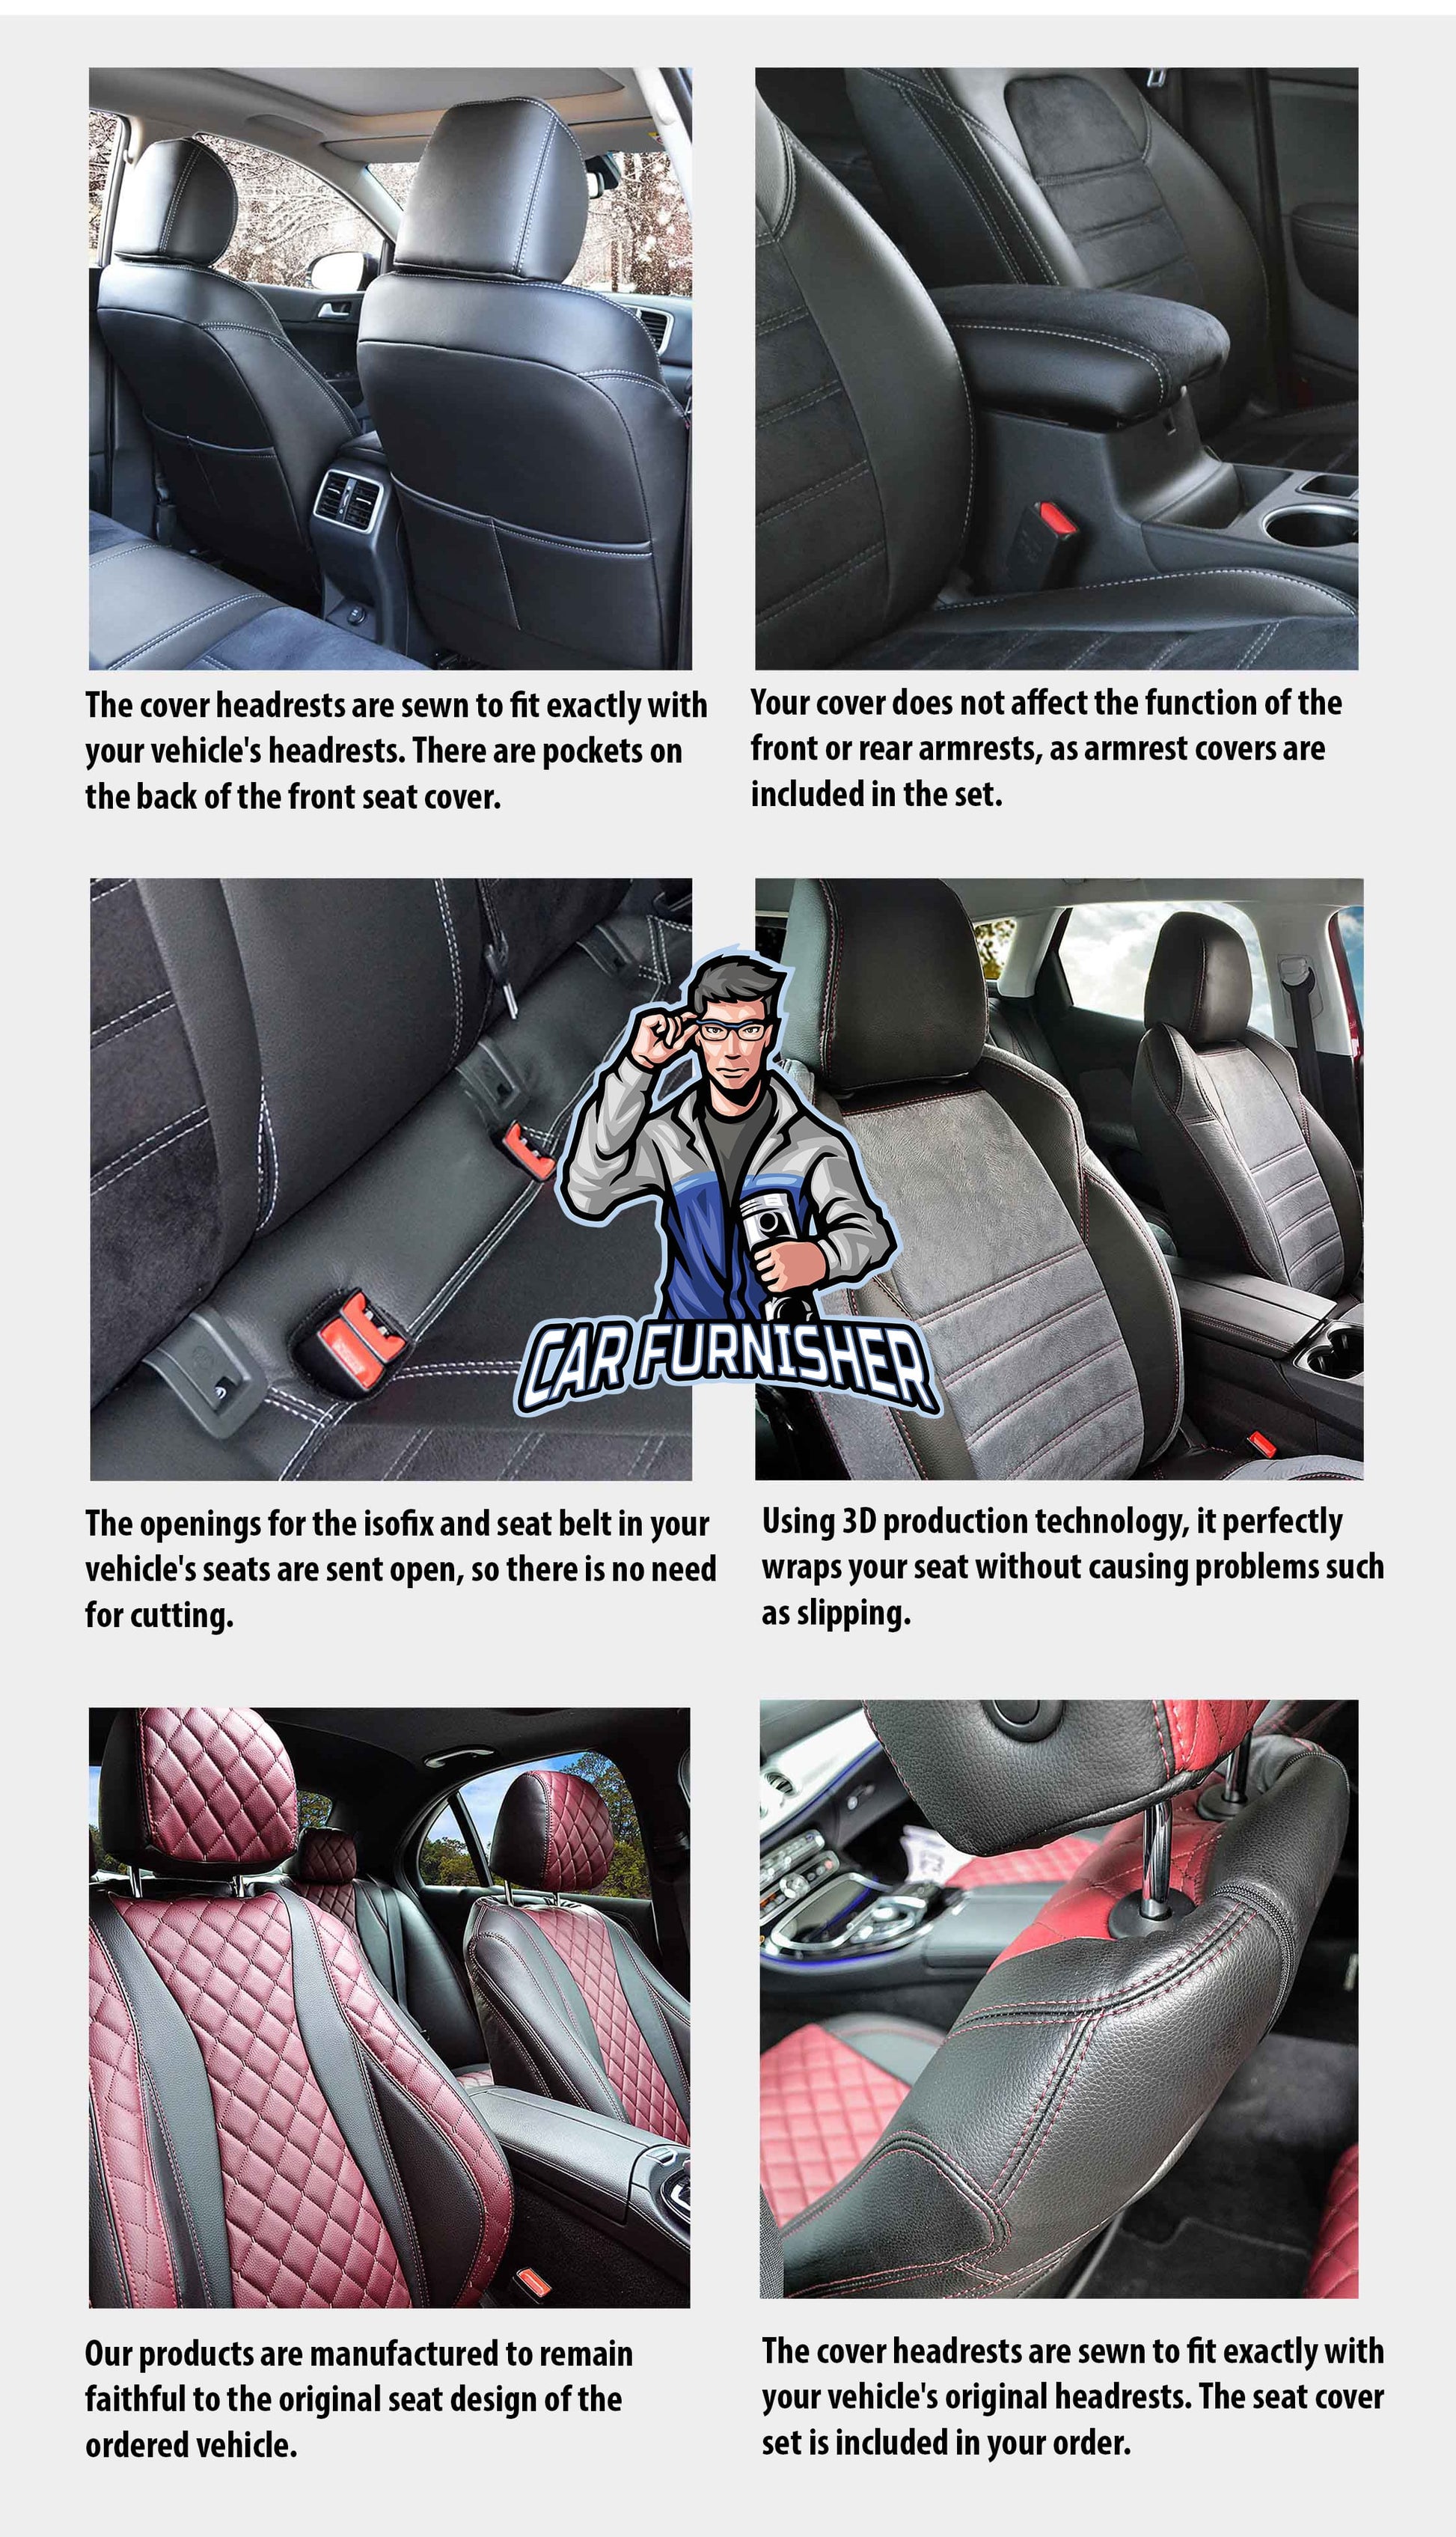 Skoda Kamiq Seat Covers Amsterdam Leather Design Black Leather